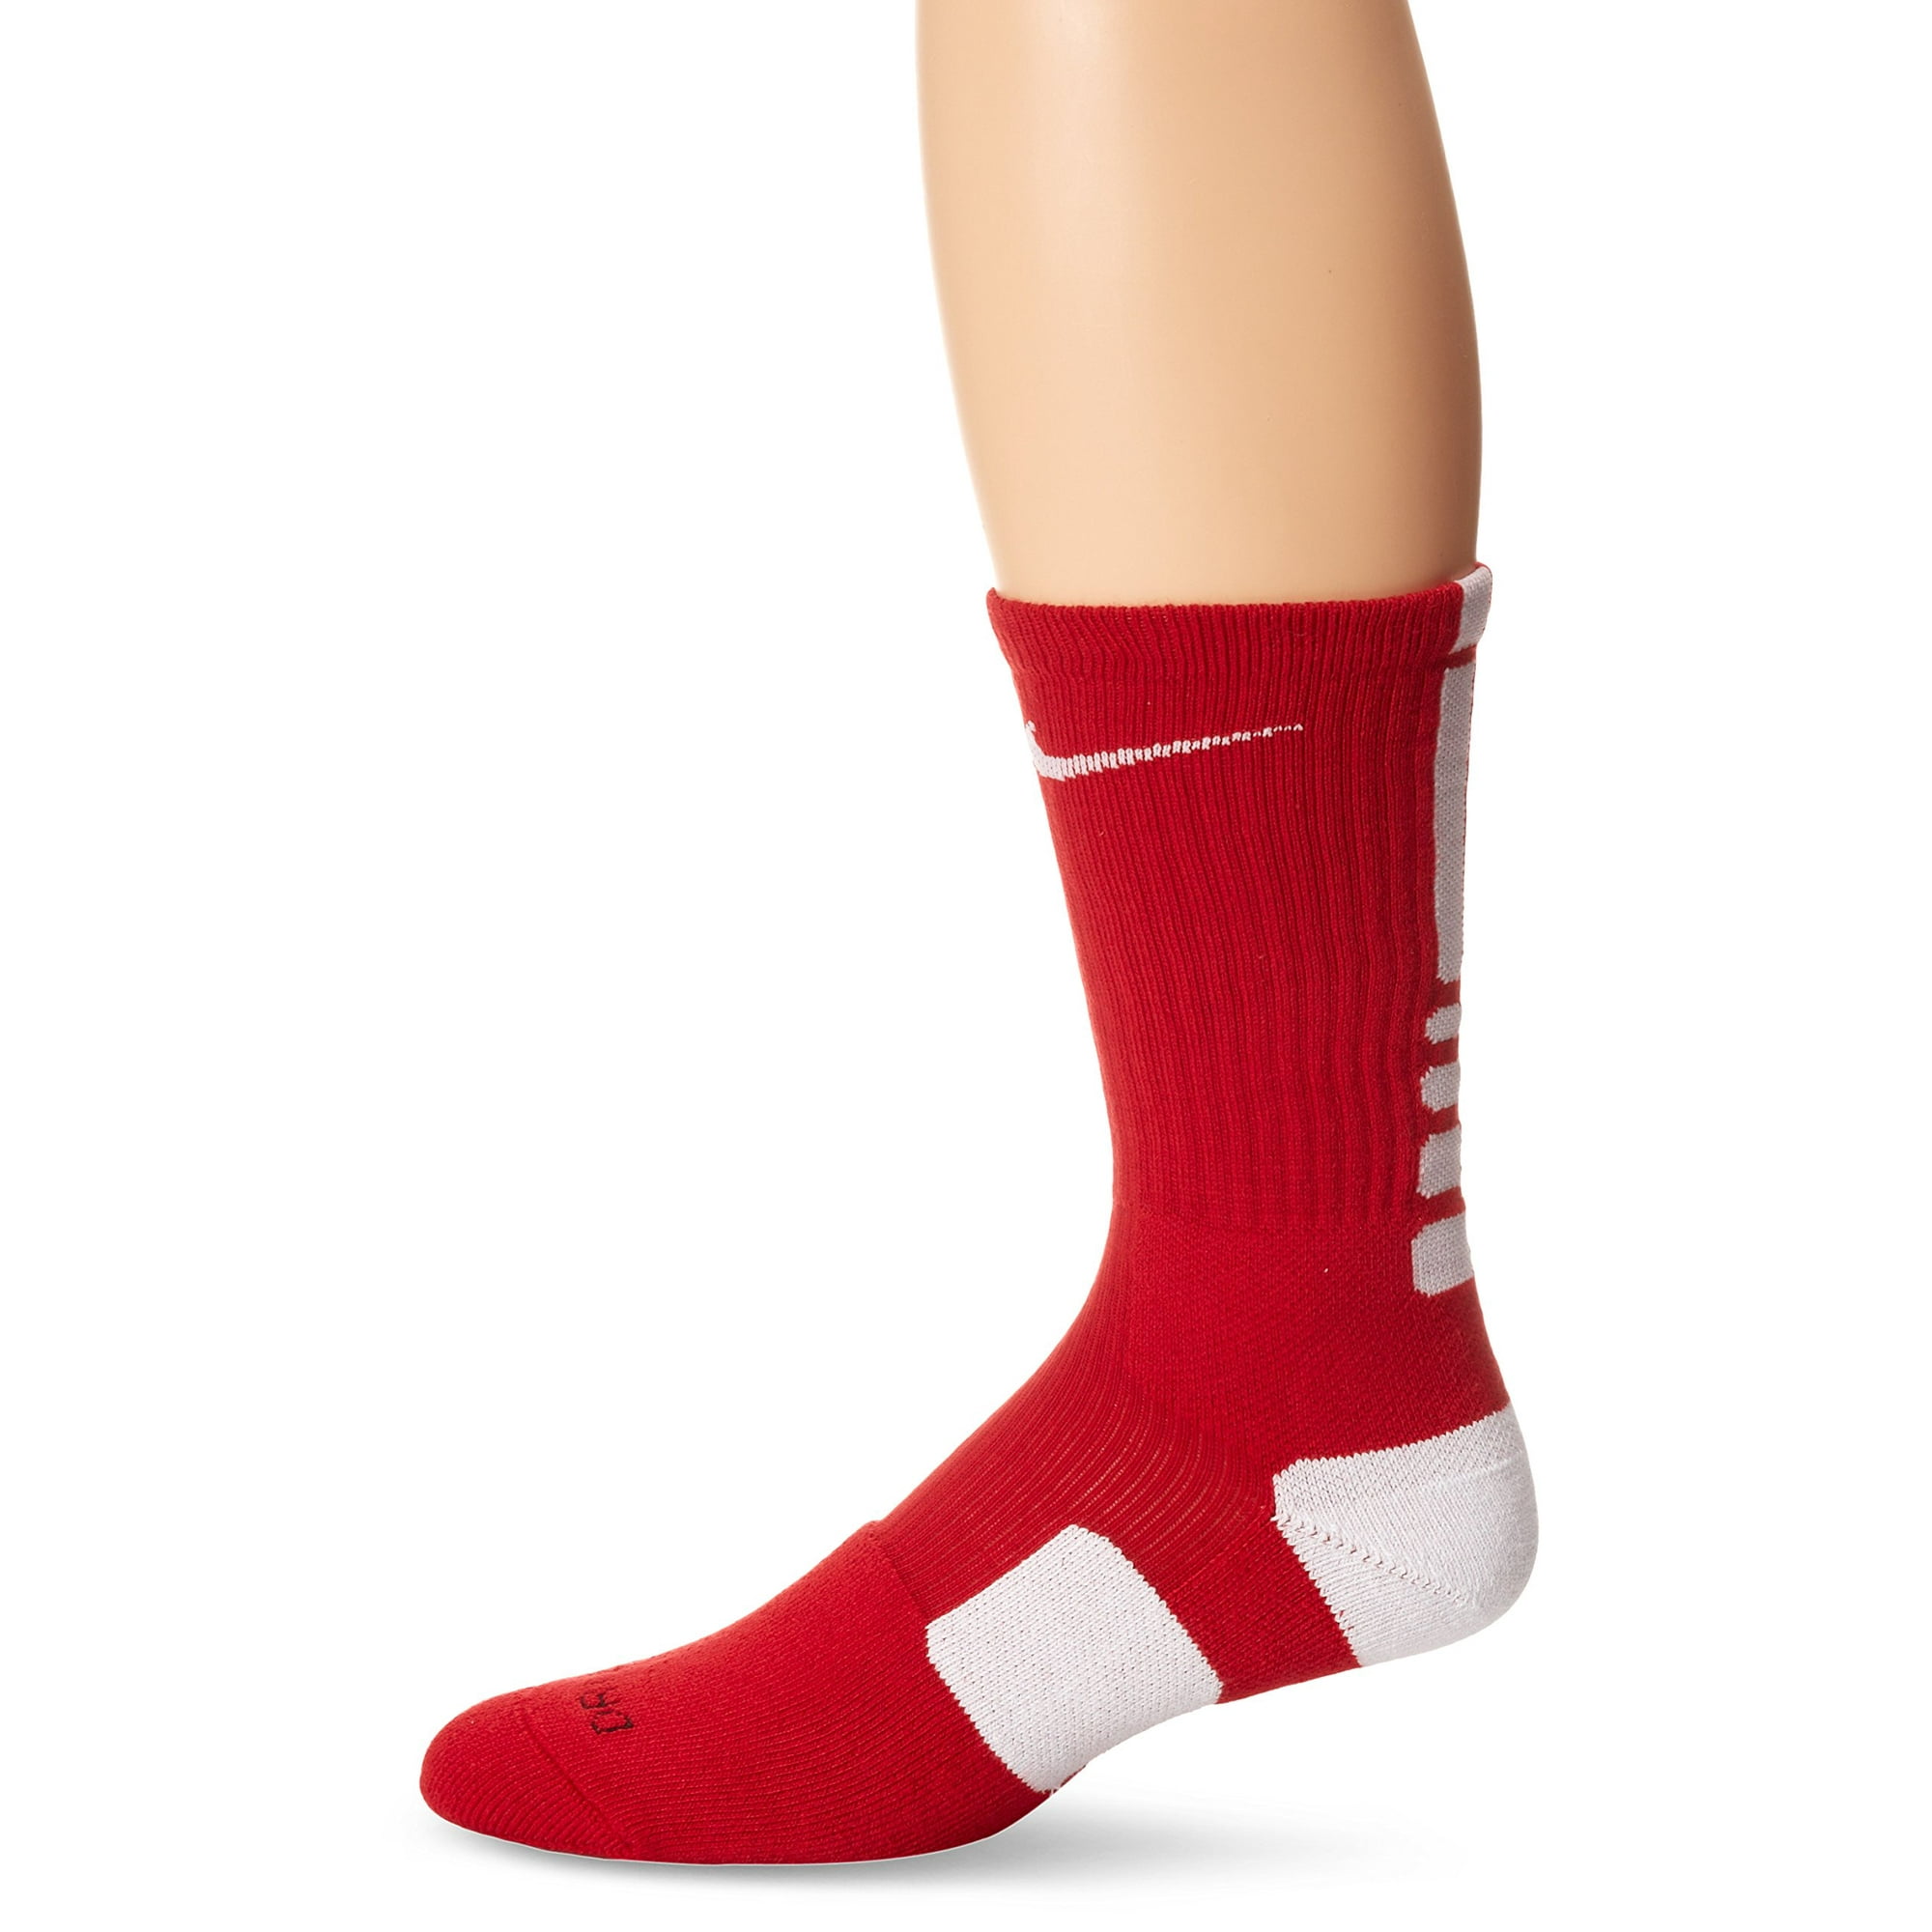 Ontaarden Labe doel The Nike Elite Basketball Crew Socks Varsity Red/White Size Large | Walmart  Canada